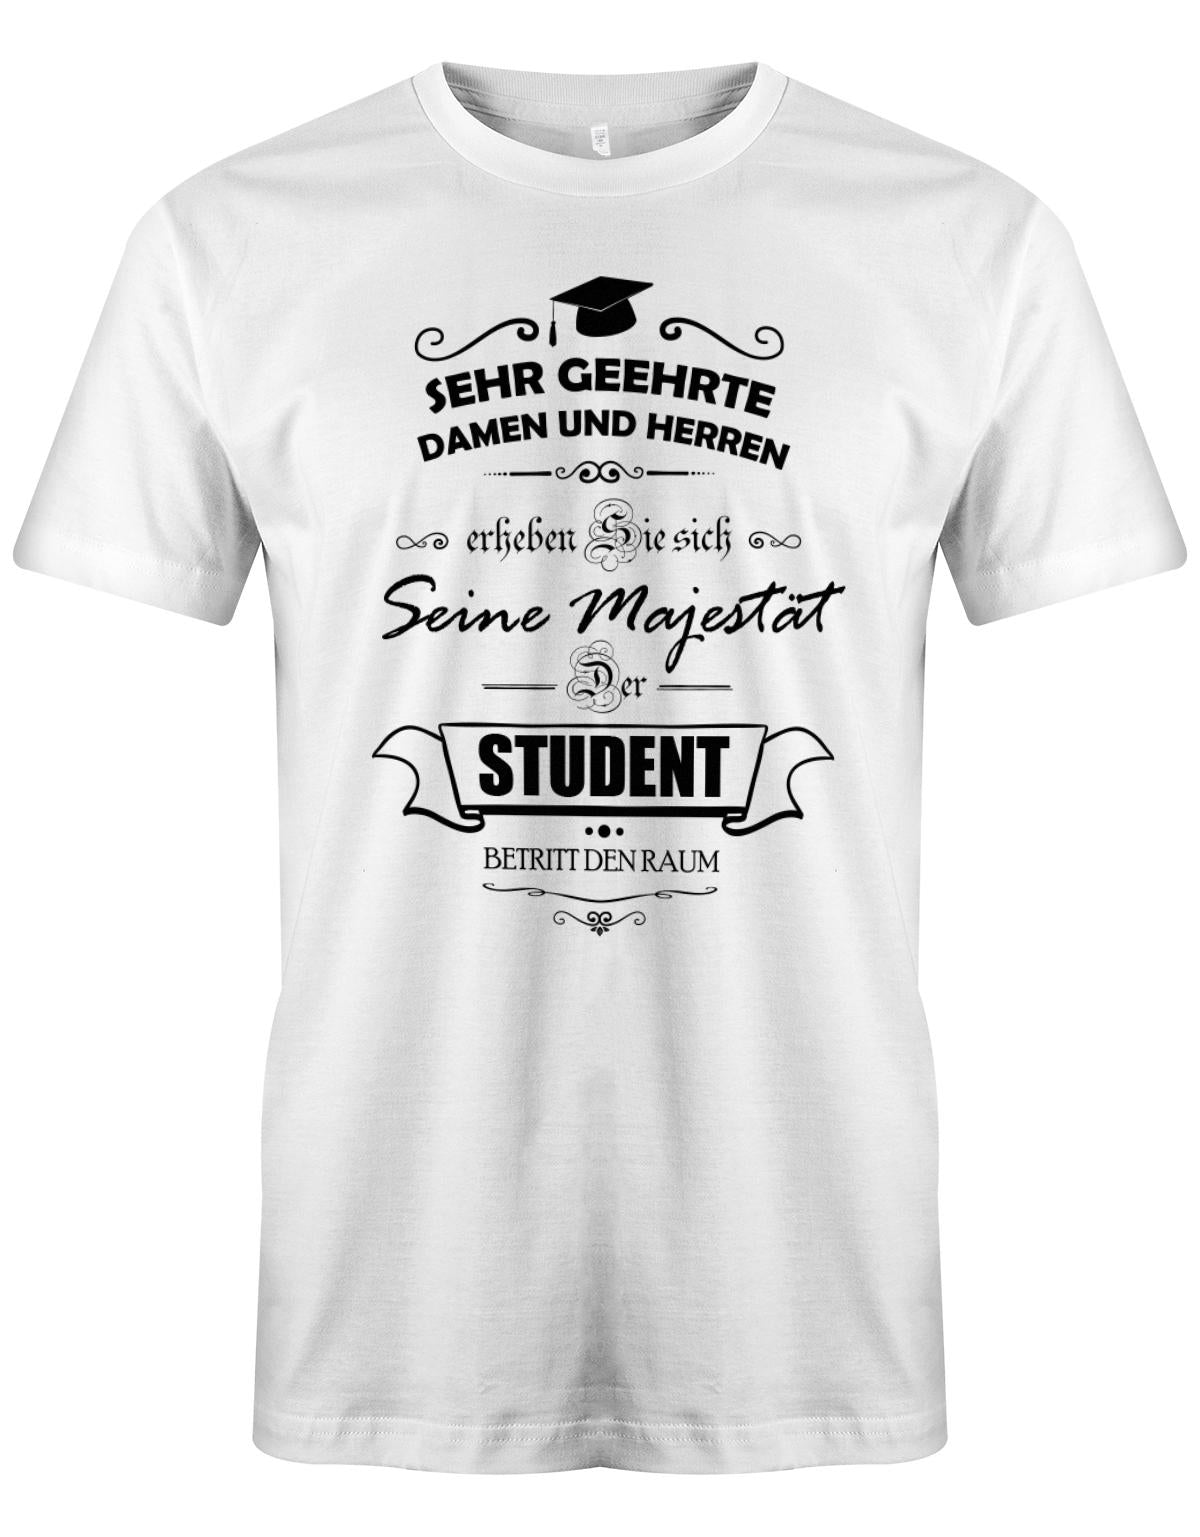 Seine-Majest-t-der-Student-betritt-den-Raum-Herren-Studium-Student-Shirt-Weiss